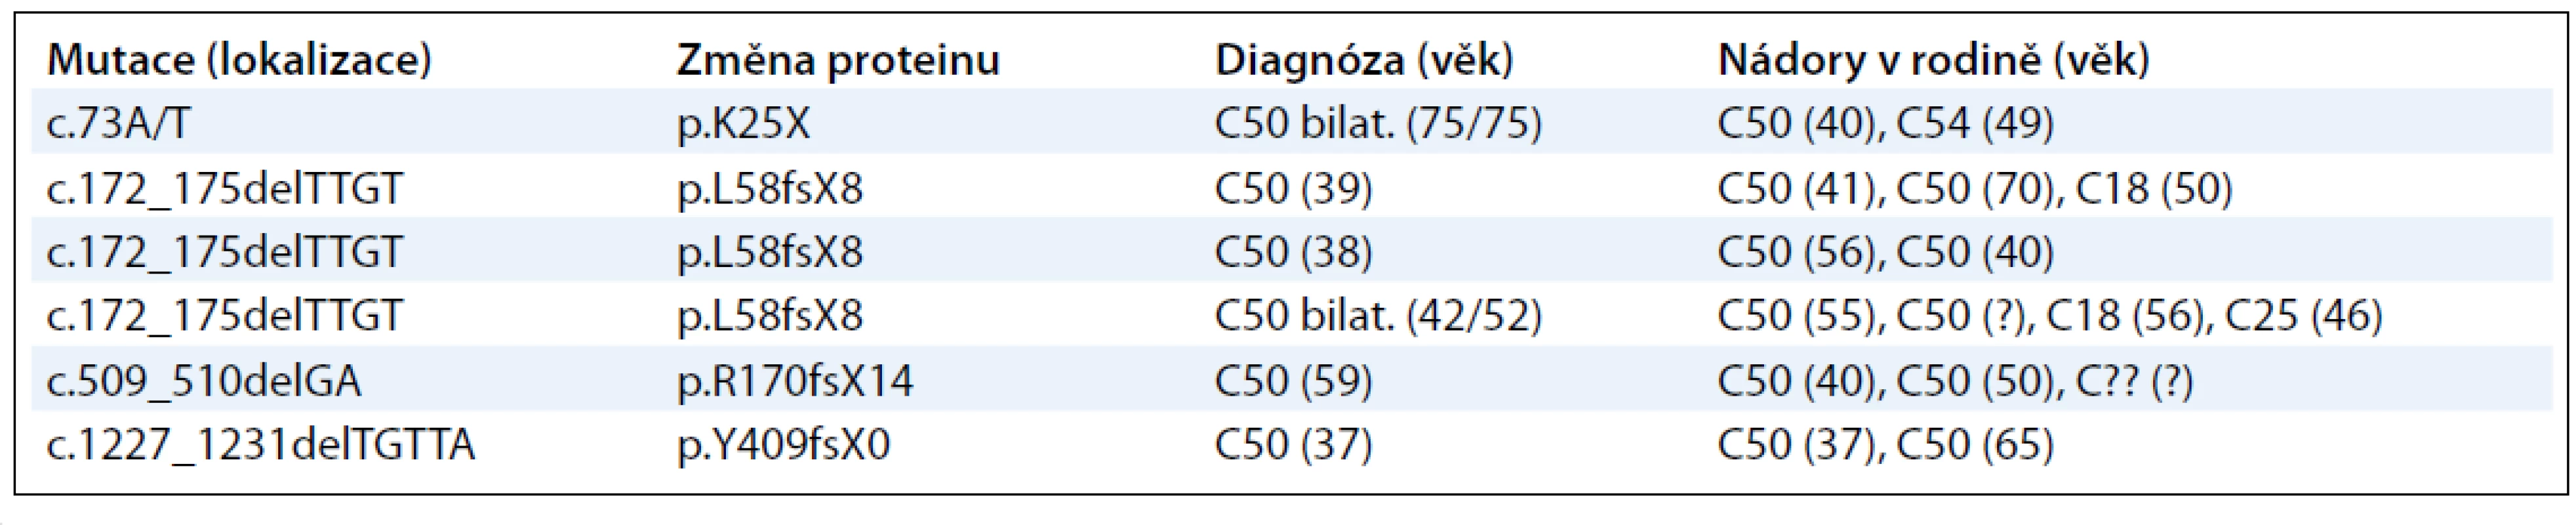 Výsledky mutační analýzy genu PALB2 u 190 vysoce rizikových pacientek s karcinomem prsu z ČR.